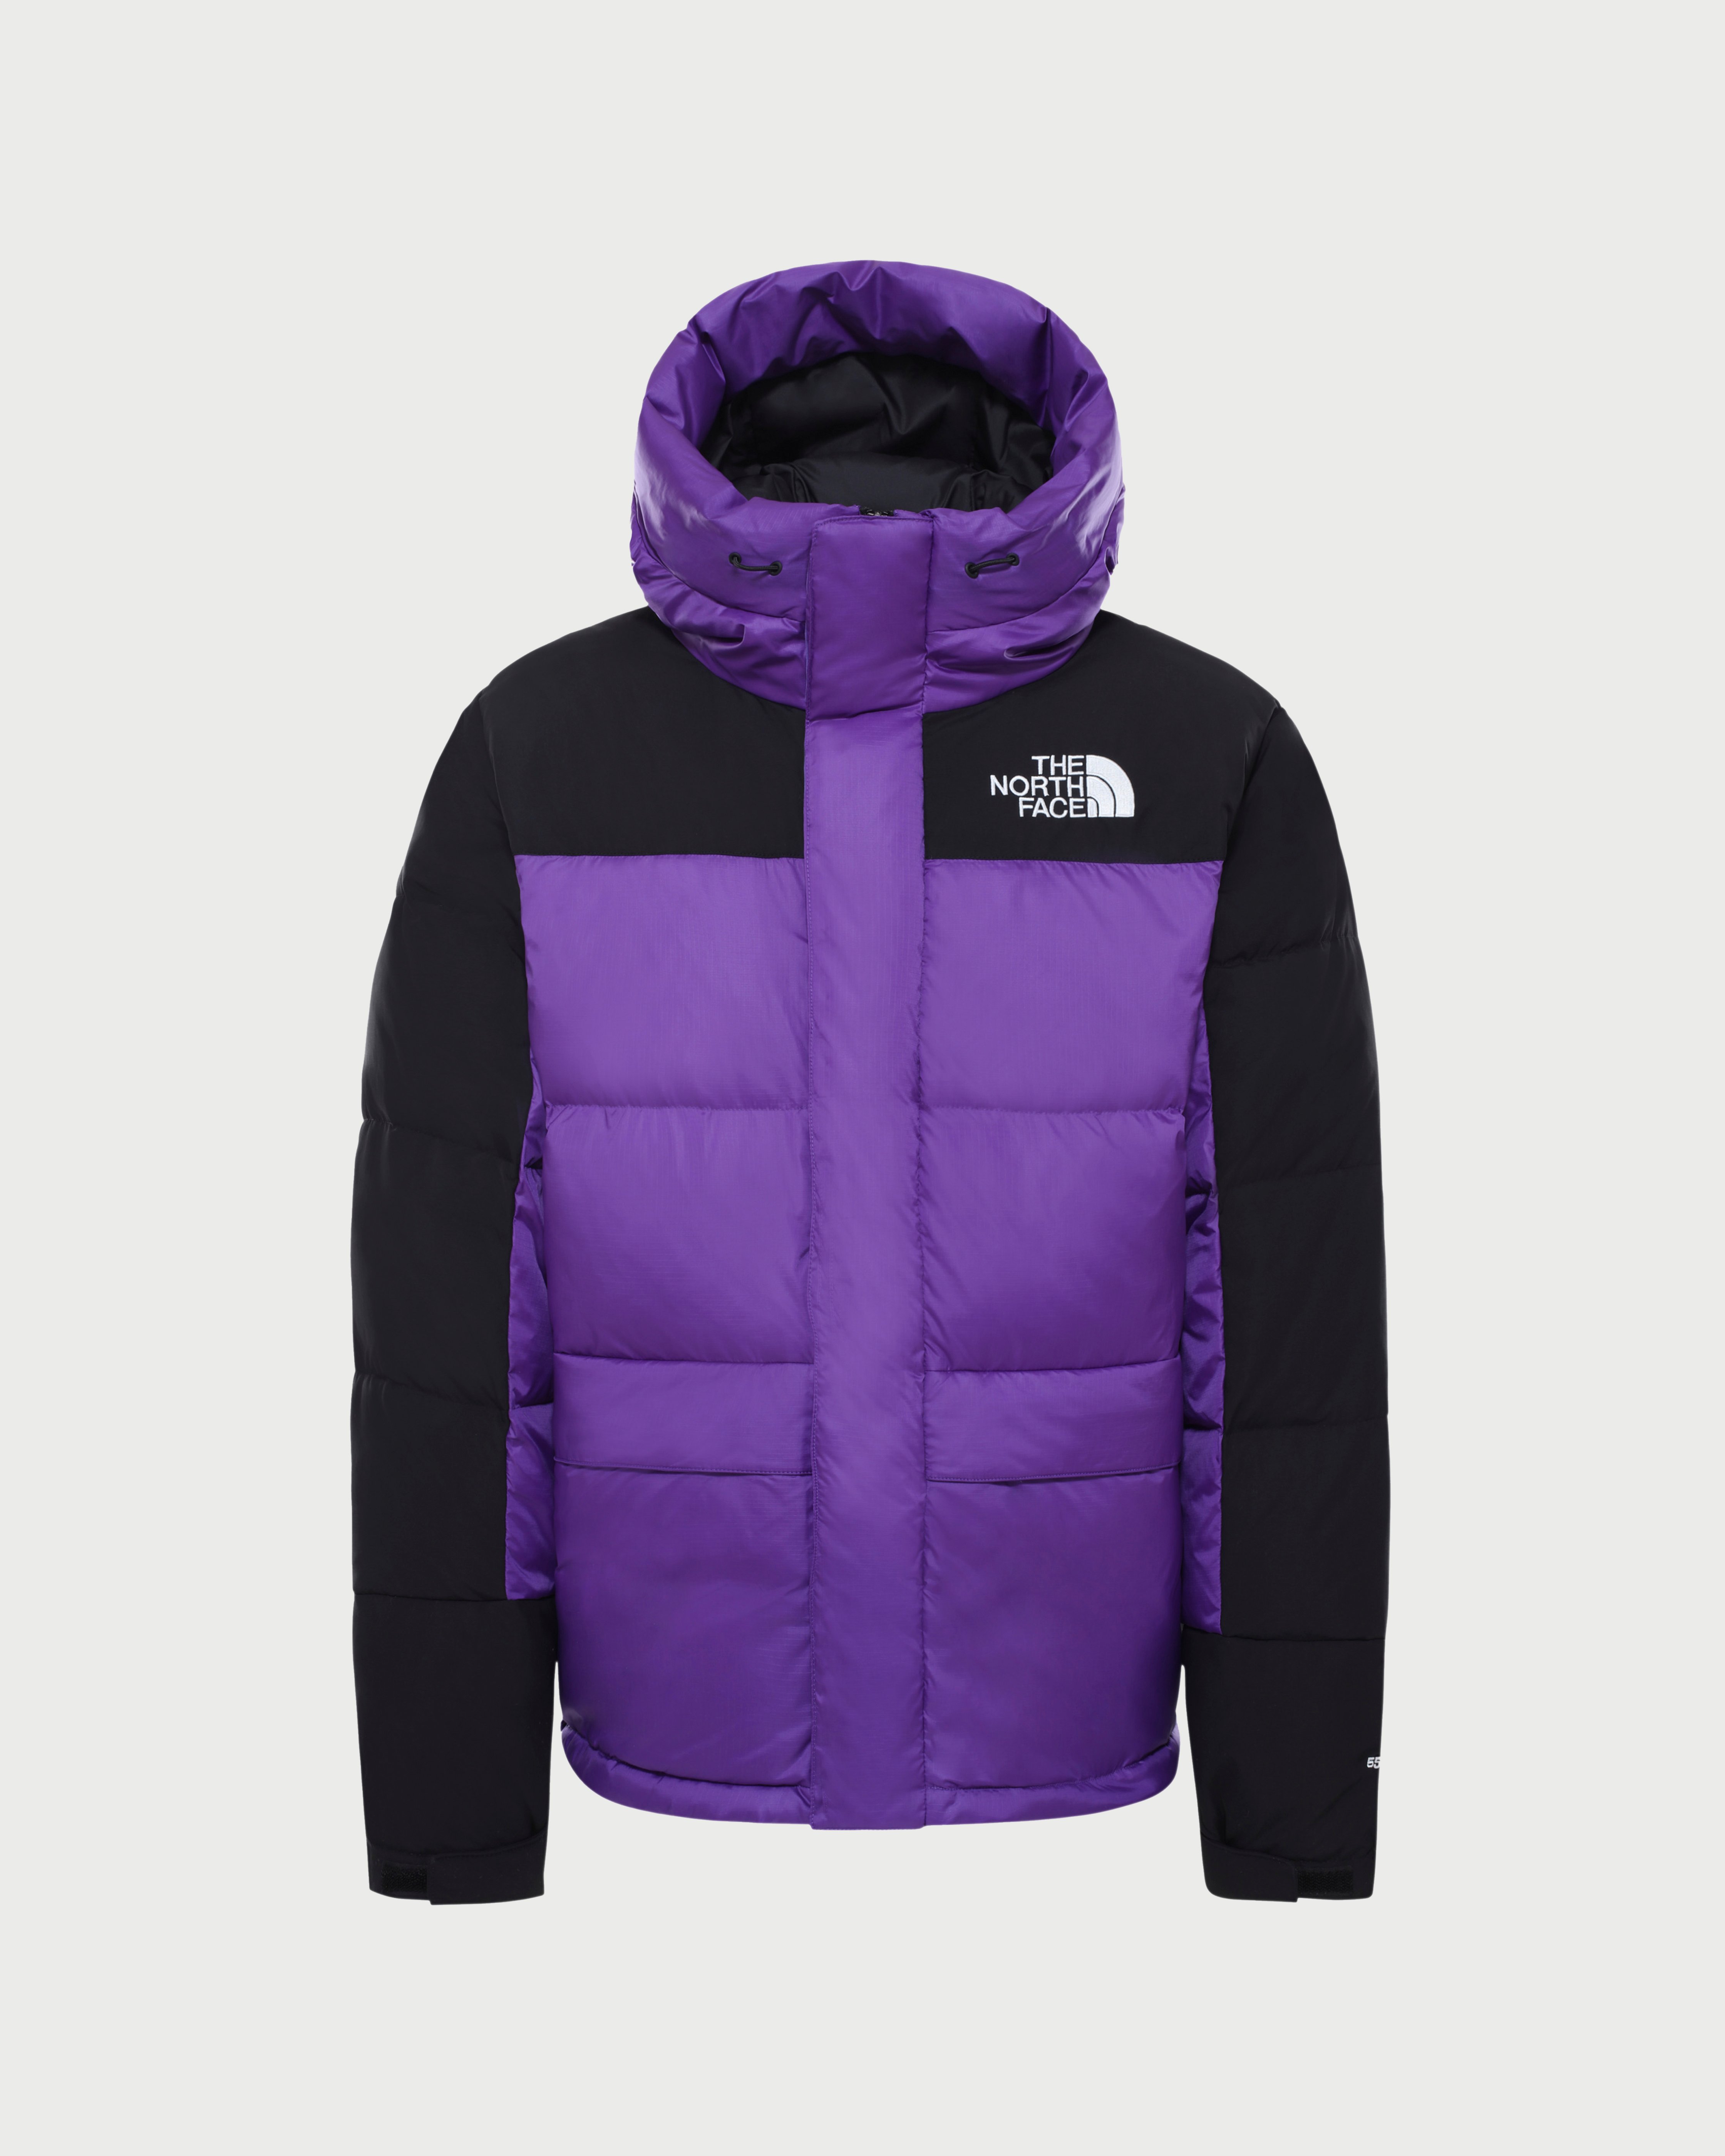 The North Face - Himalayan Down Jacket Peak Purple Unisex - Clothing - Purple - Image 1